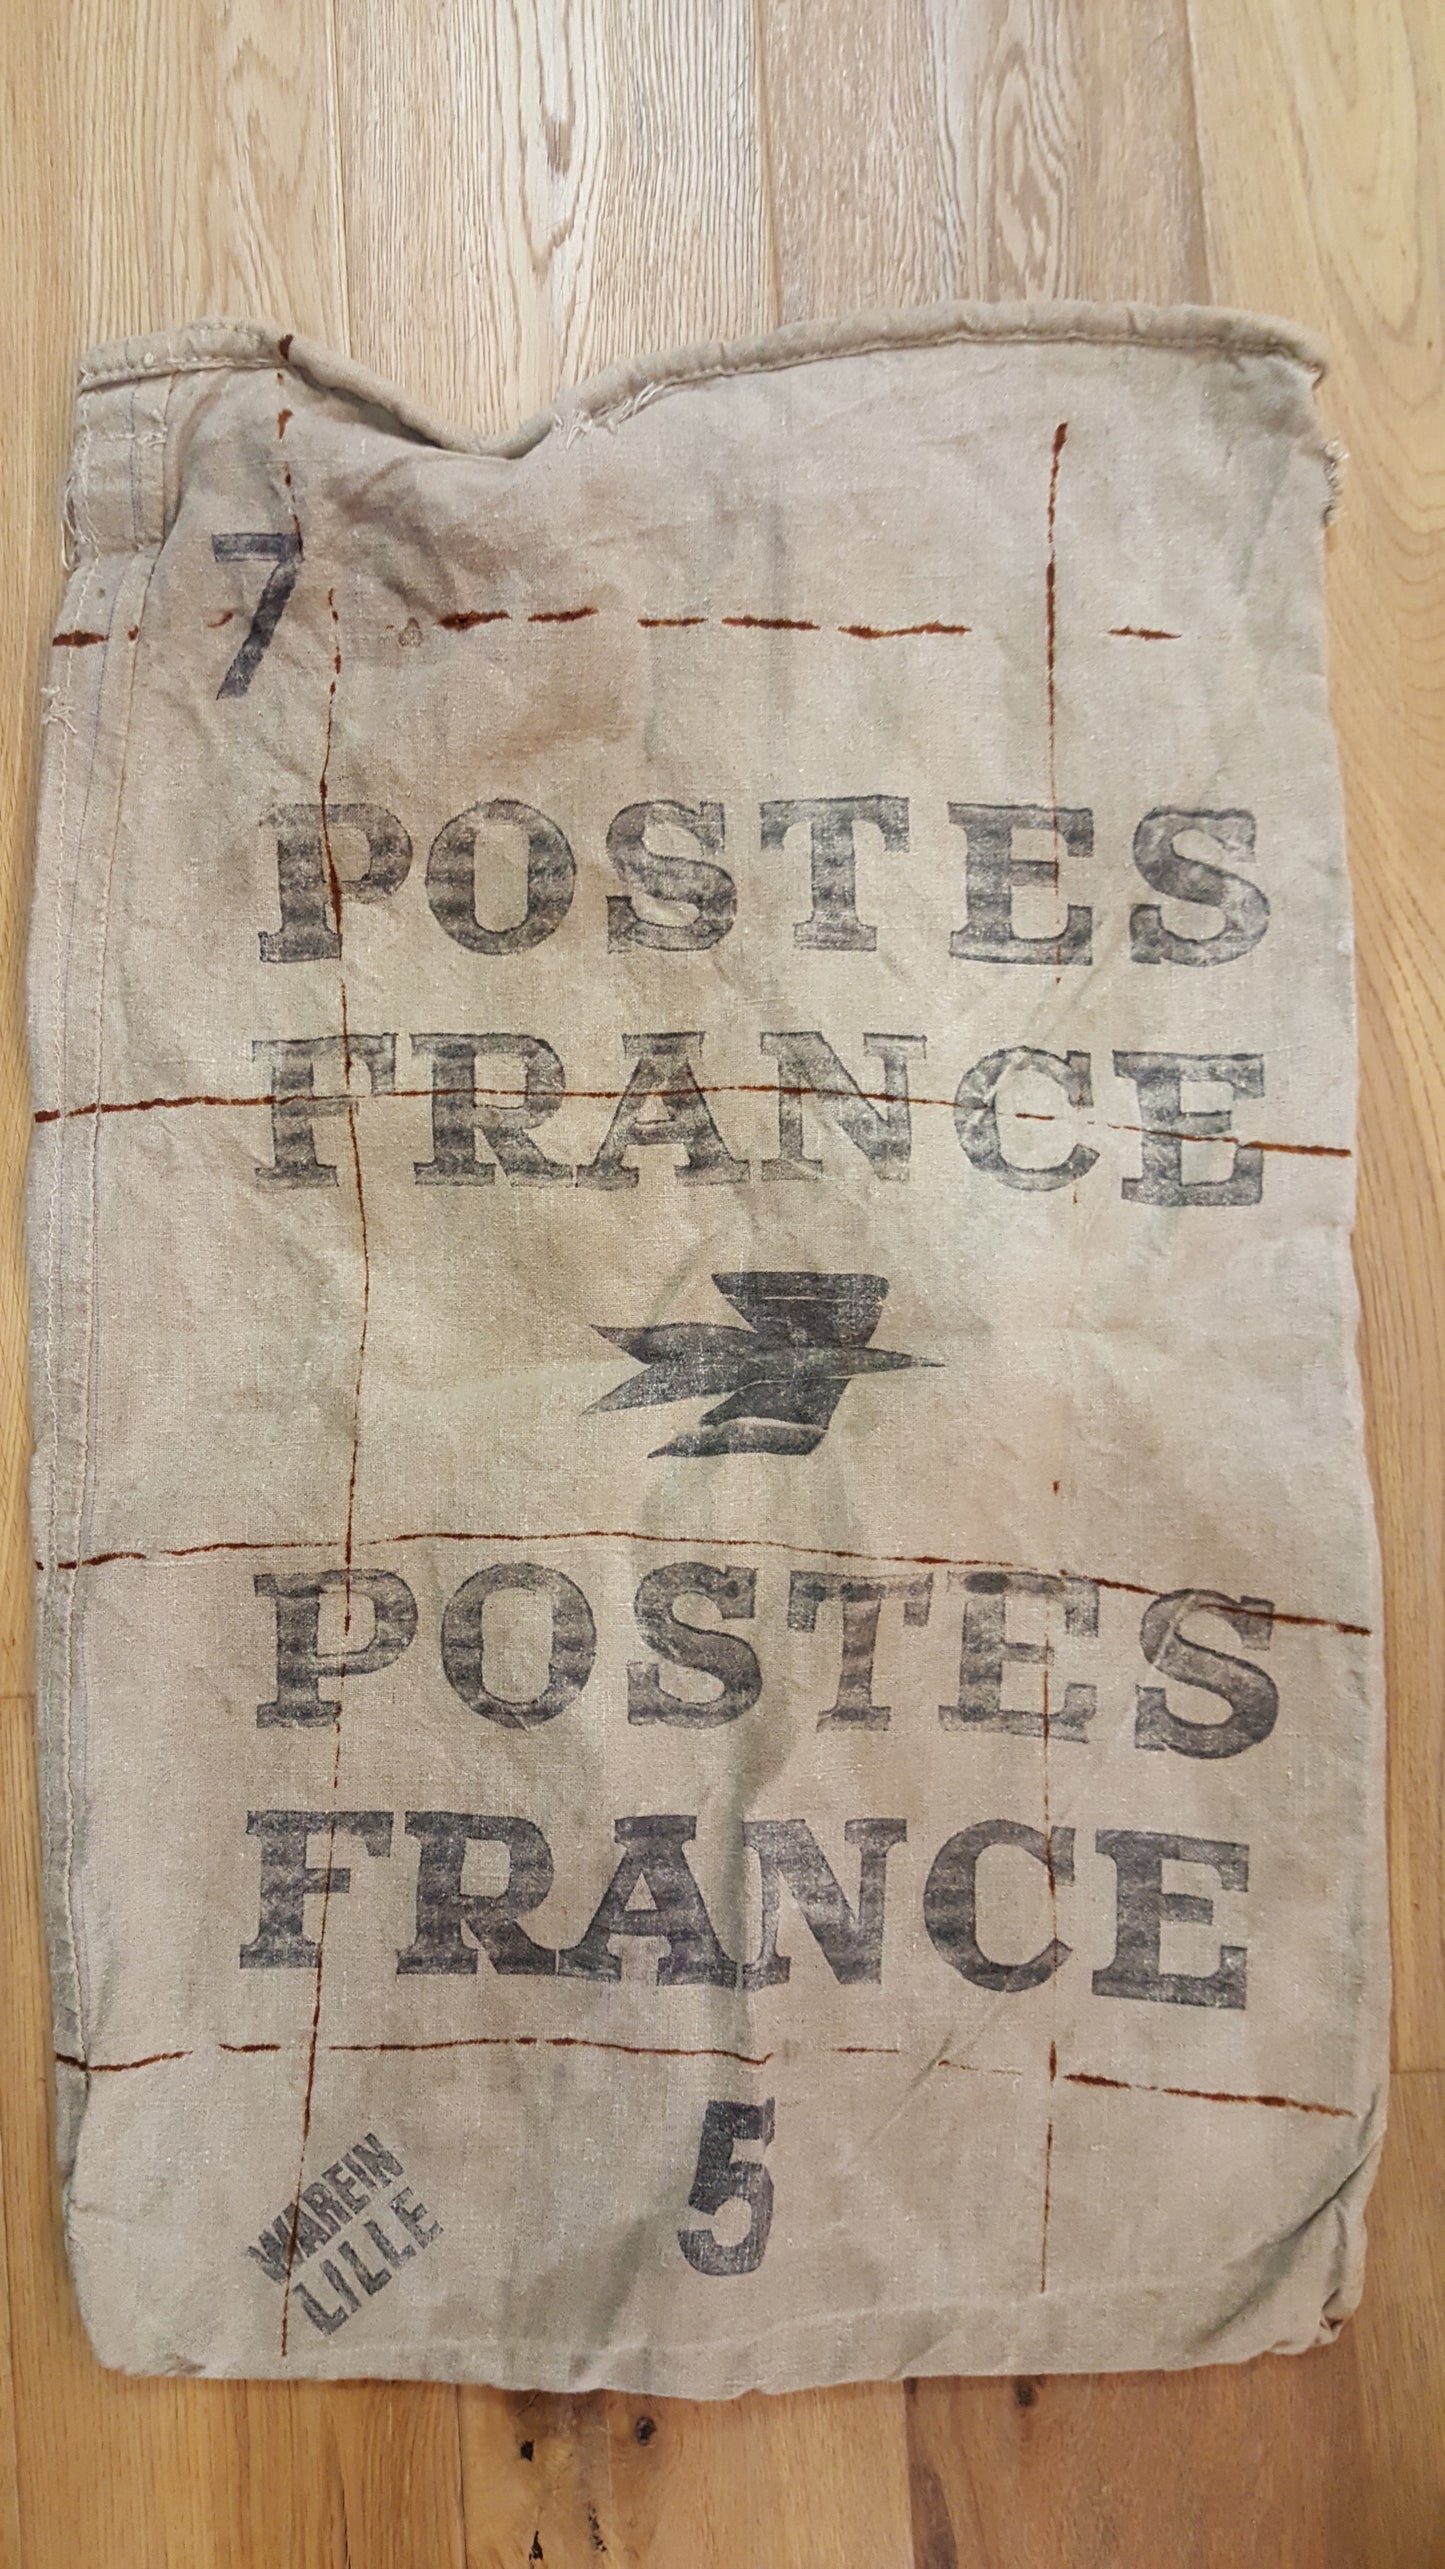 Fabric Postal Bag from Belgium